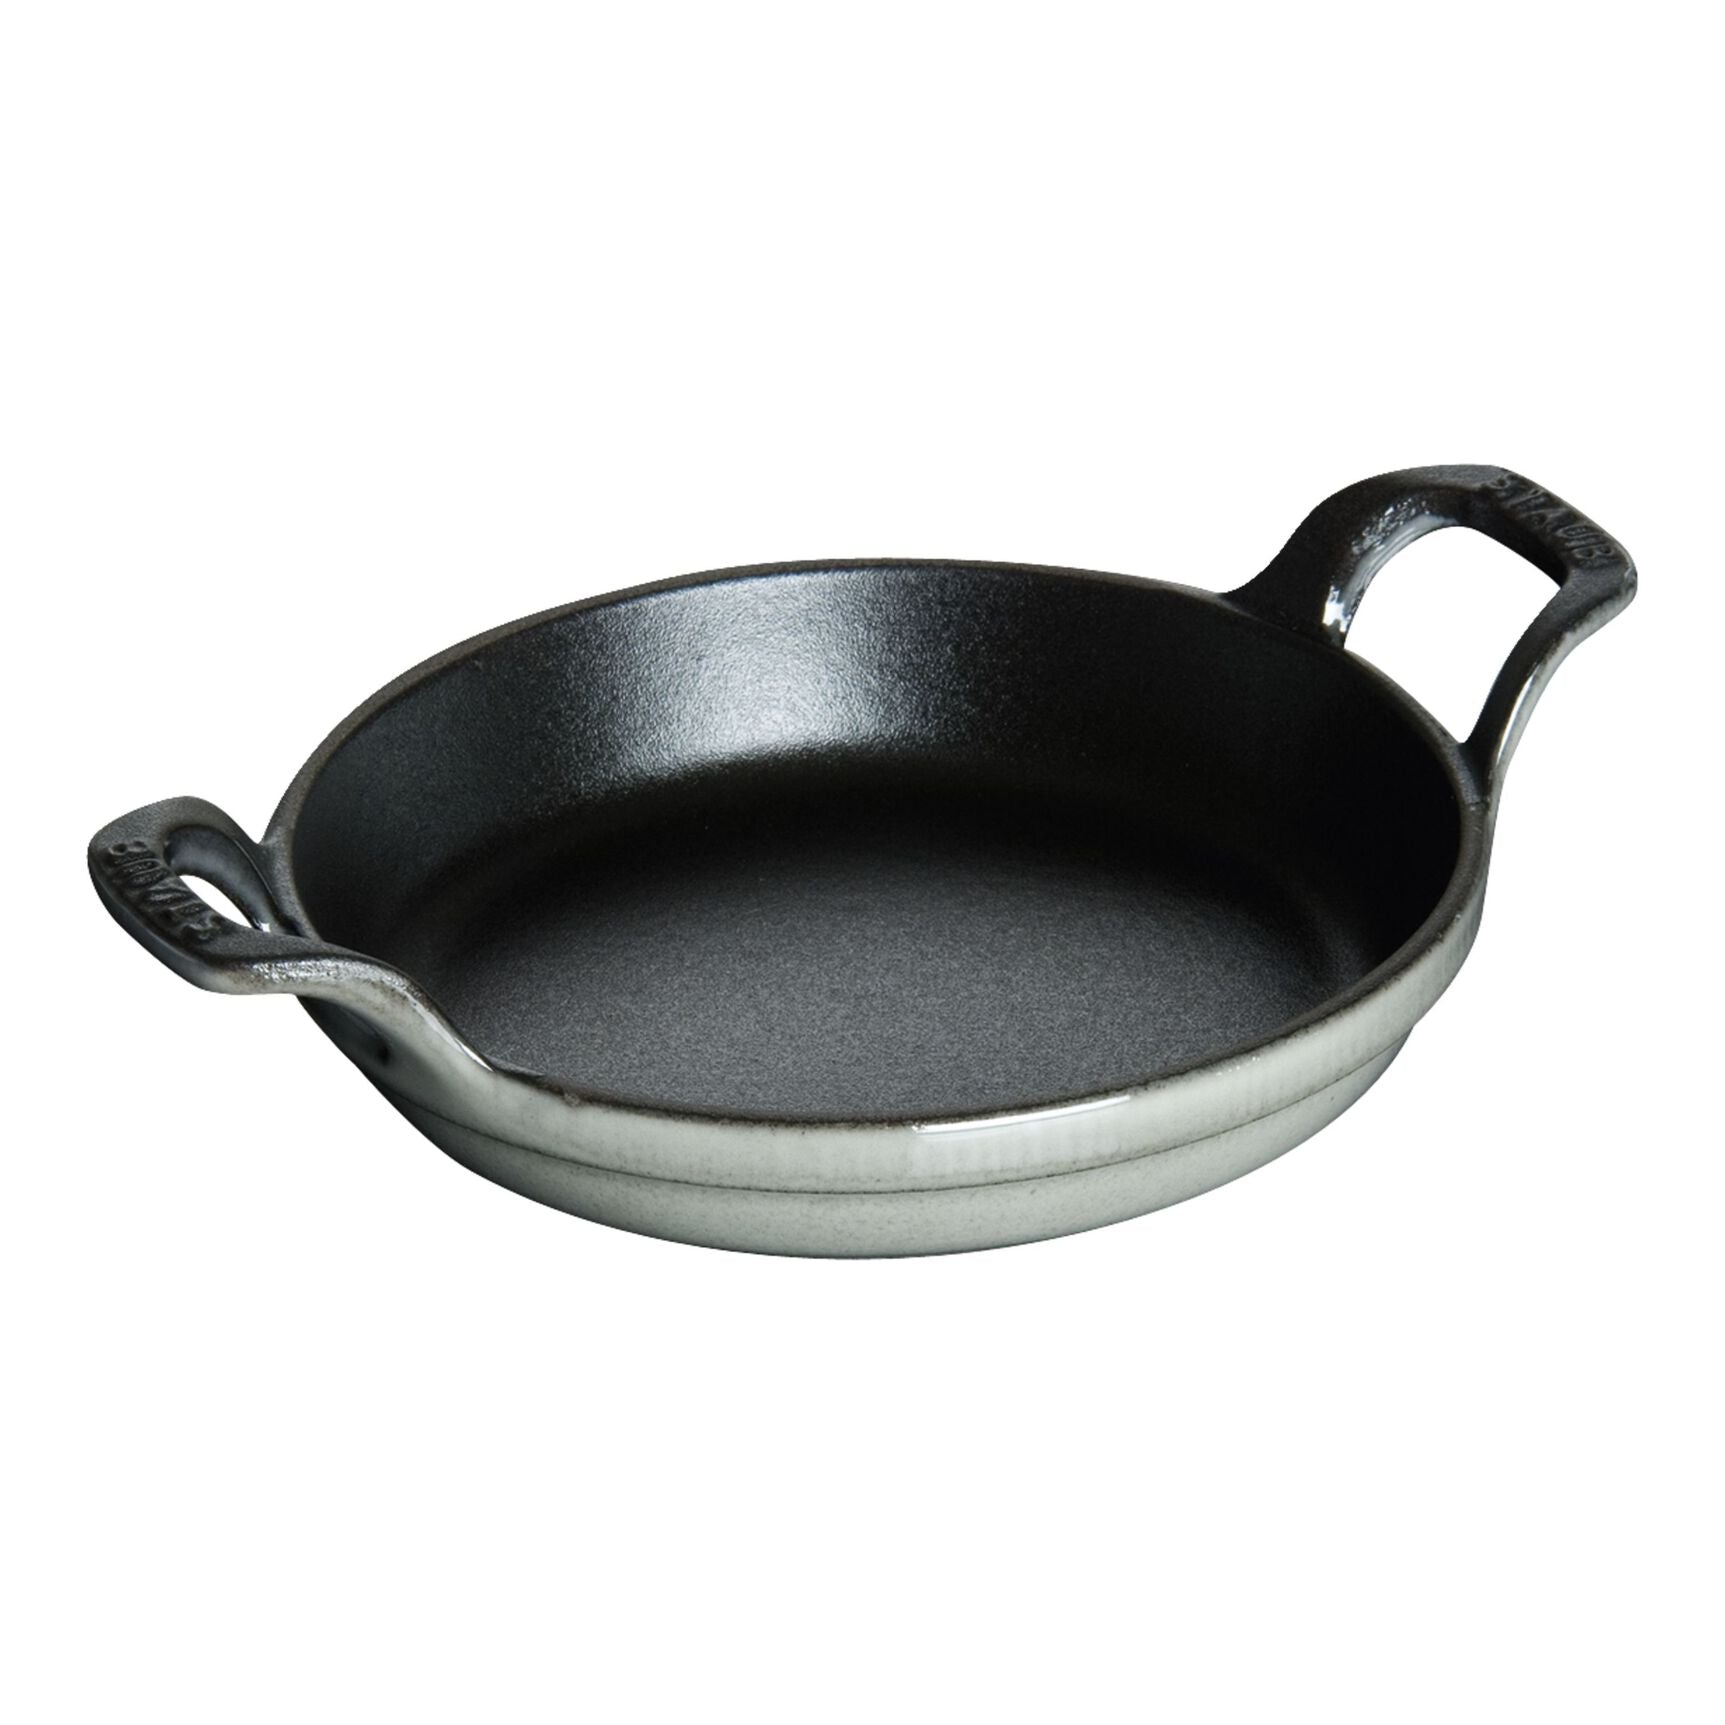 Baking dish Staub Mini round 12 cm, Graphite grey 40509-544-0